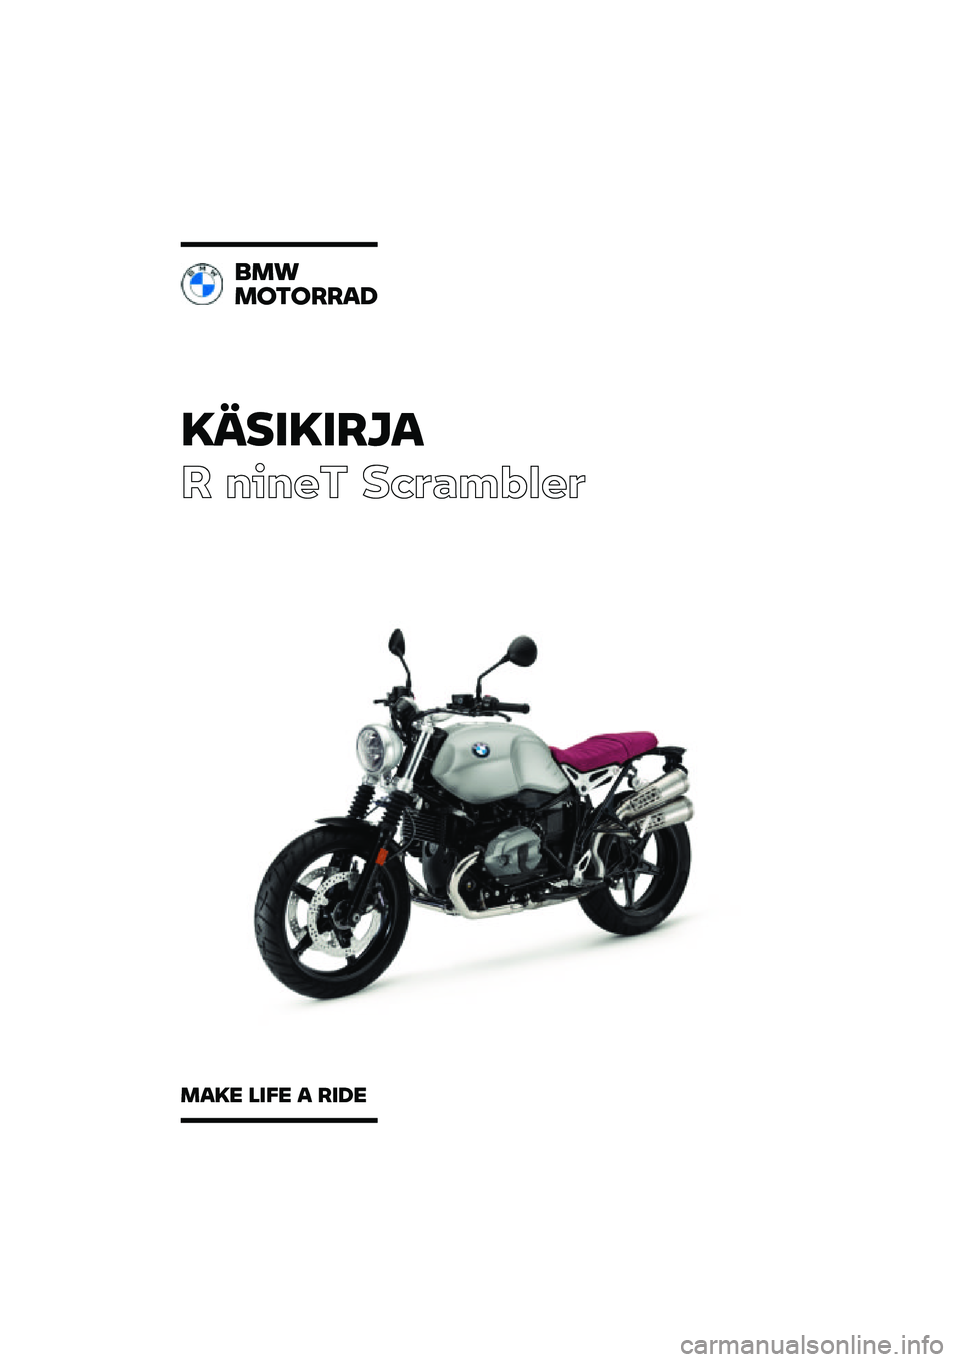 BMW MOTORRAD R NINE T SCRAMBLER 2021  Käsikirja (in Finnish) �������\b�	�
� ����� ��\b�	�
��\f�
��	
�
��\f
��
��
�\b�\b��
���� ���� � �\b��� 